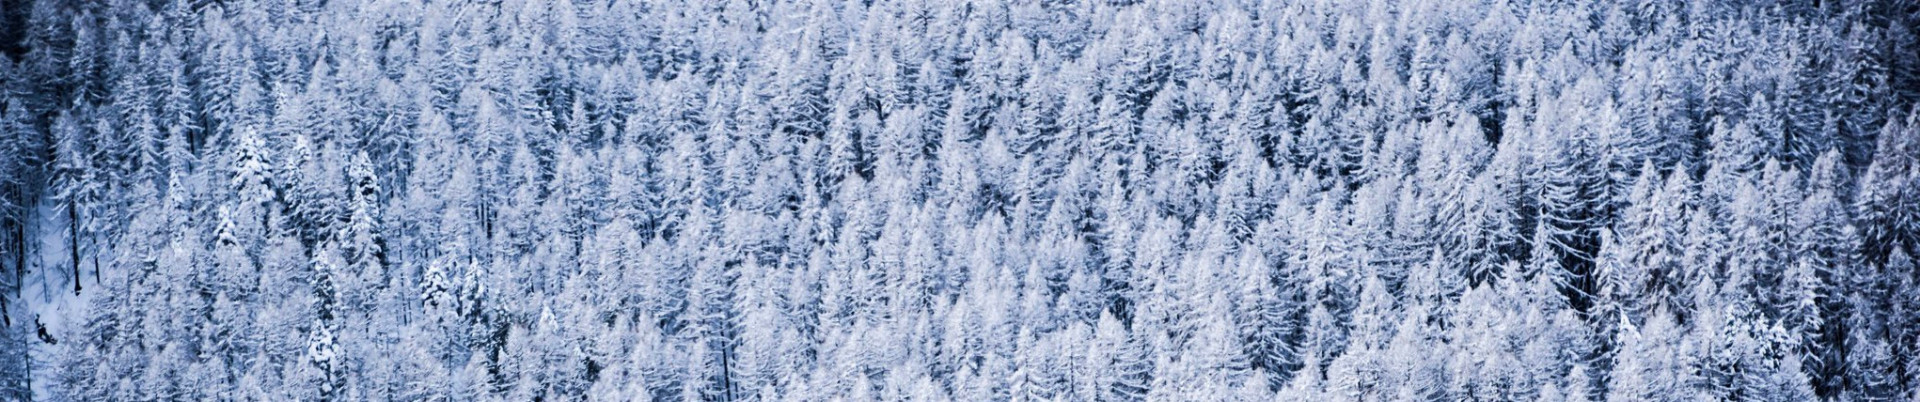 serre-chevalier-briancon-montagne-ski-location-vacances-hiver-neige-alpes